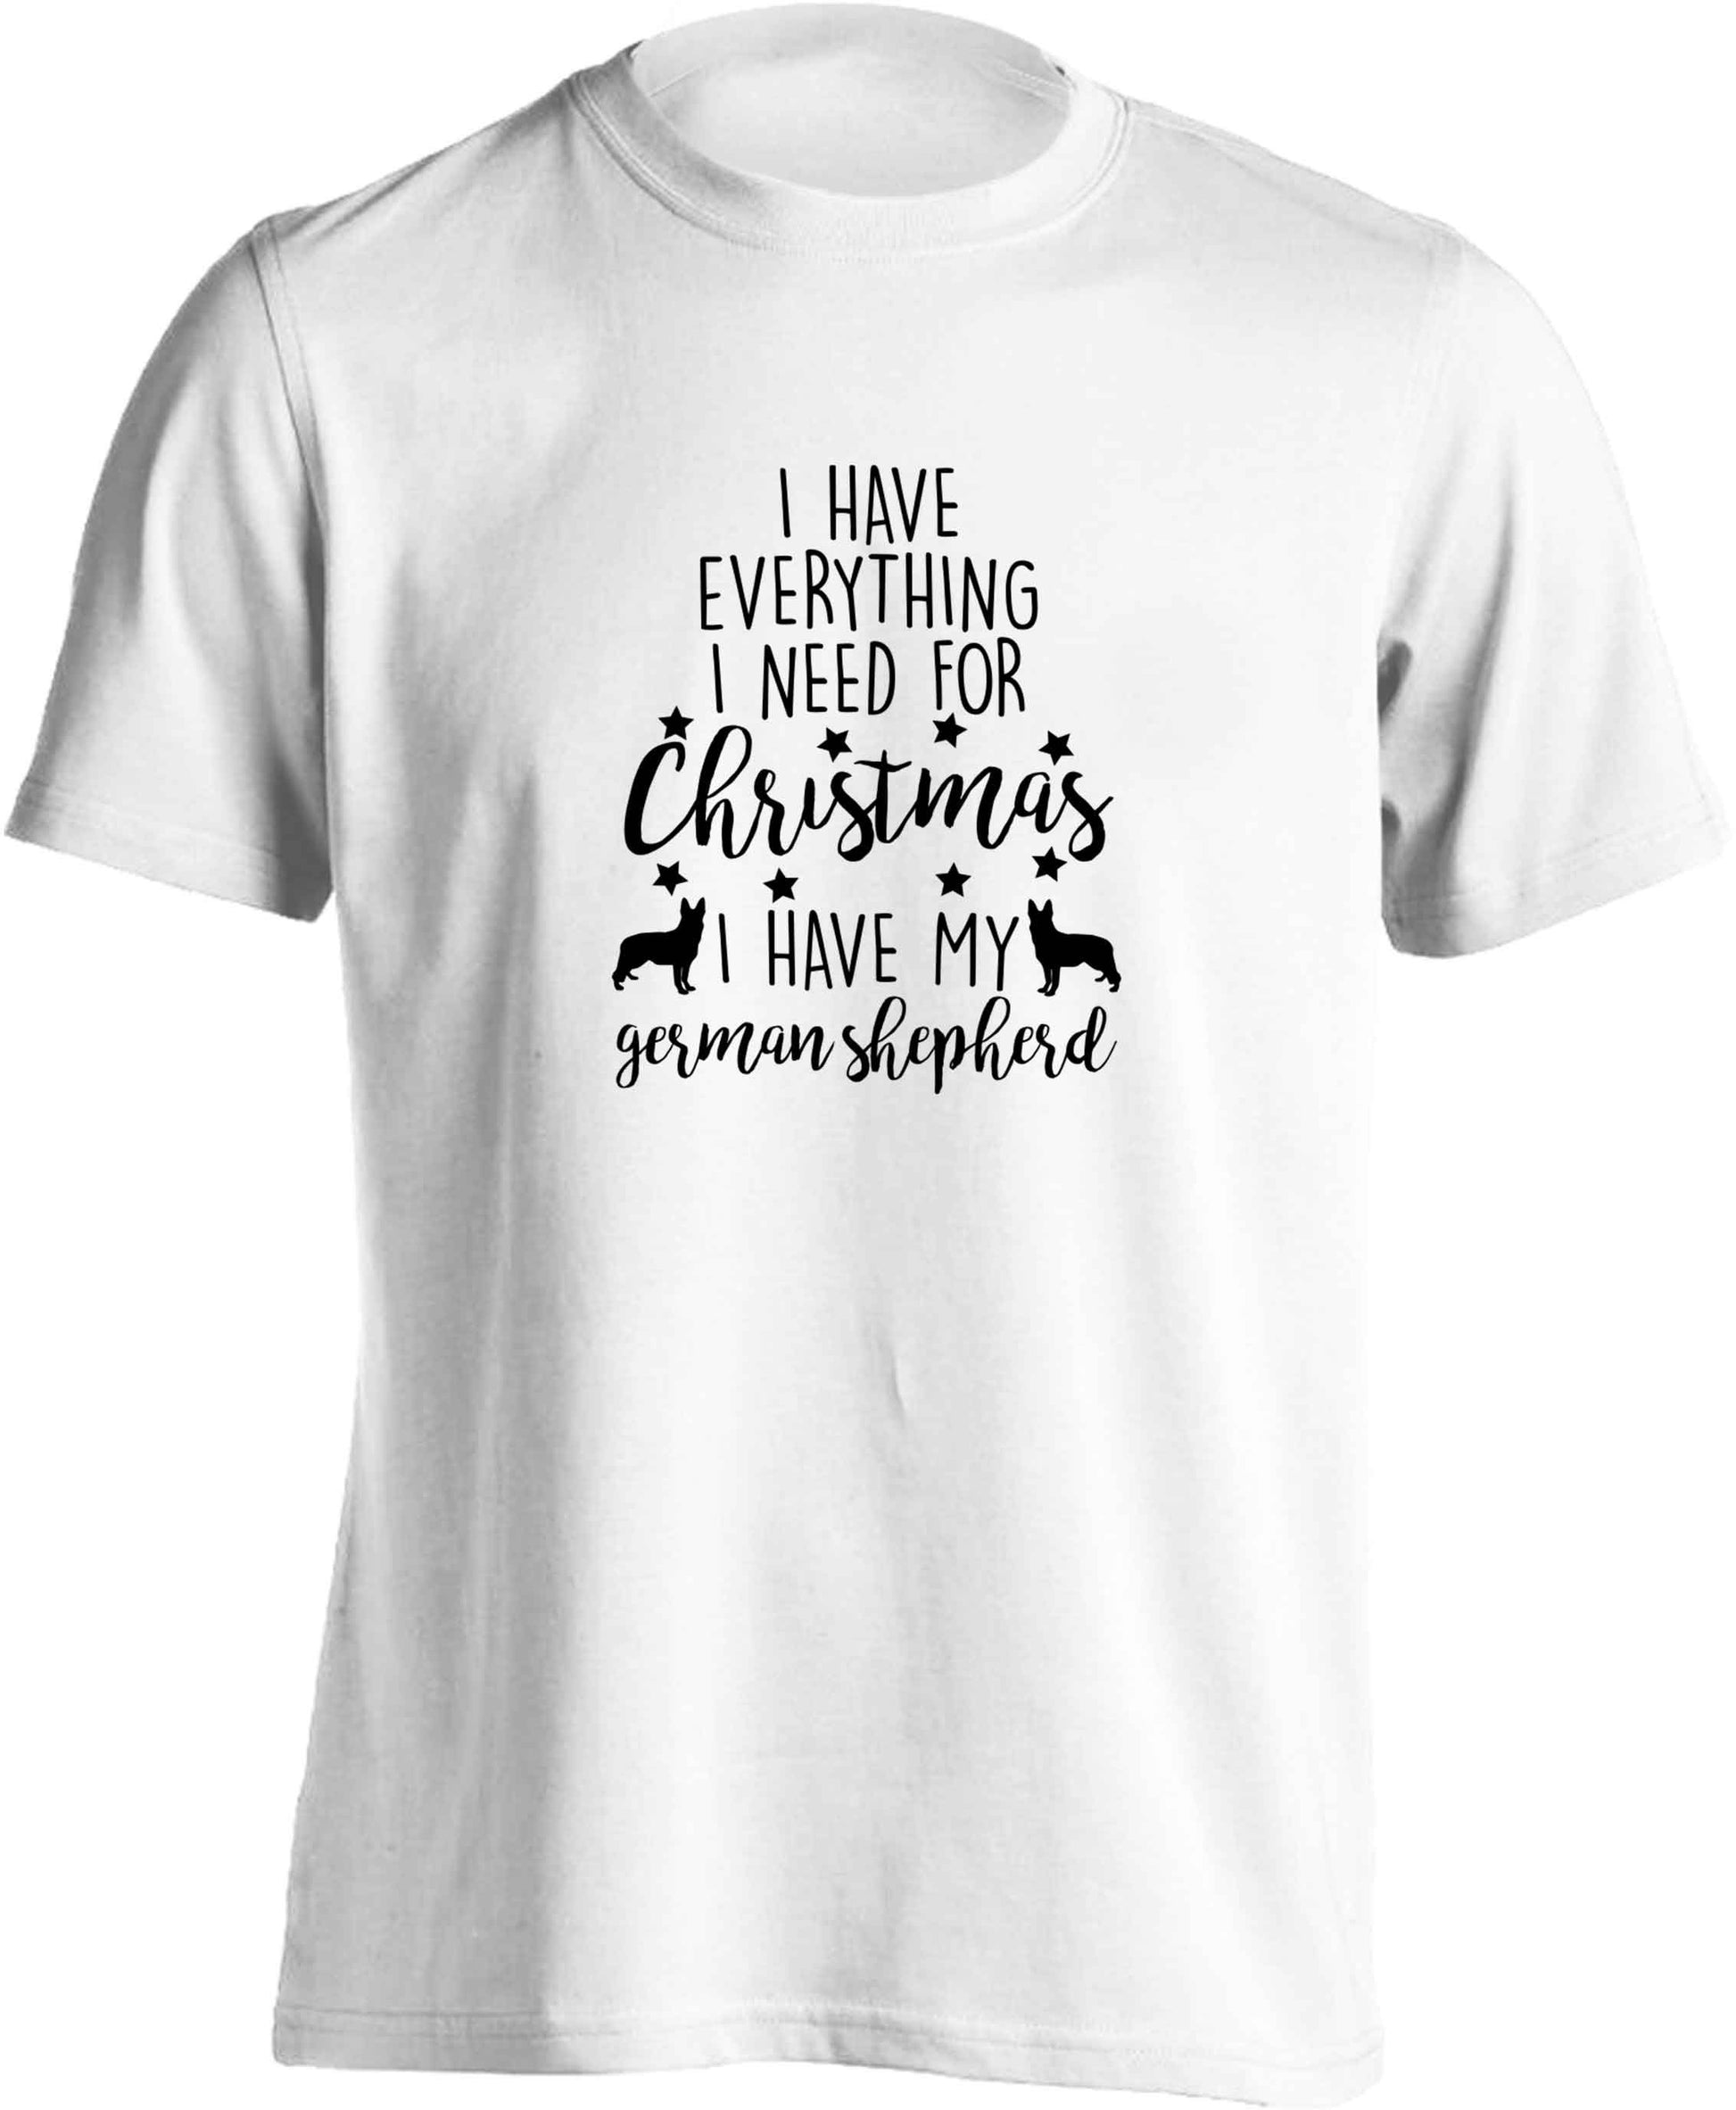 I have everything I need for Christmas I have my german shepherd adults unisex white Tshirt 2XL